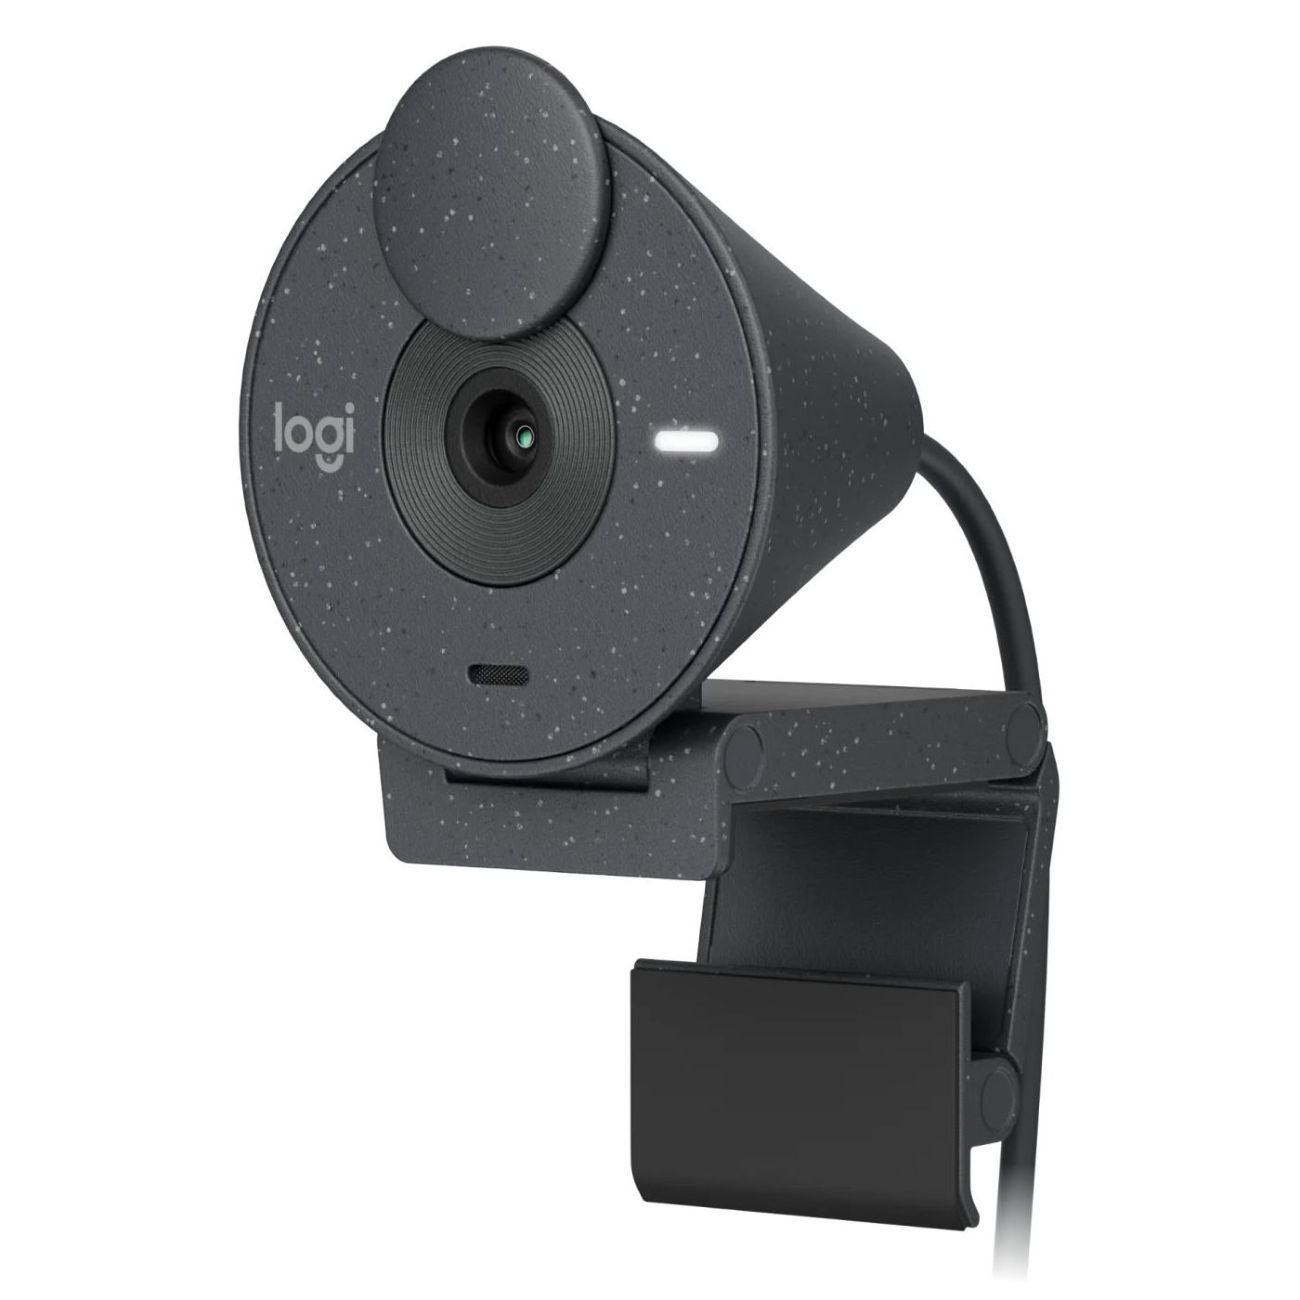 Логитеч брио. Веб-камера Logitech Brio 300 (960-001436). Камера логитеч с920. Logitech Brio 500.